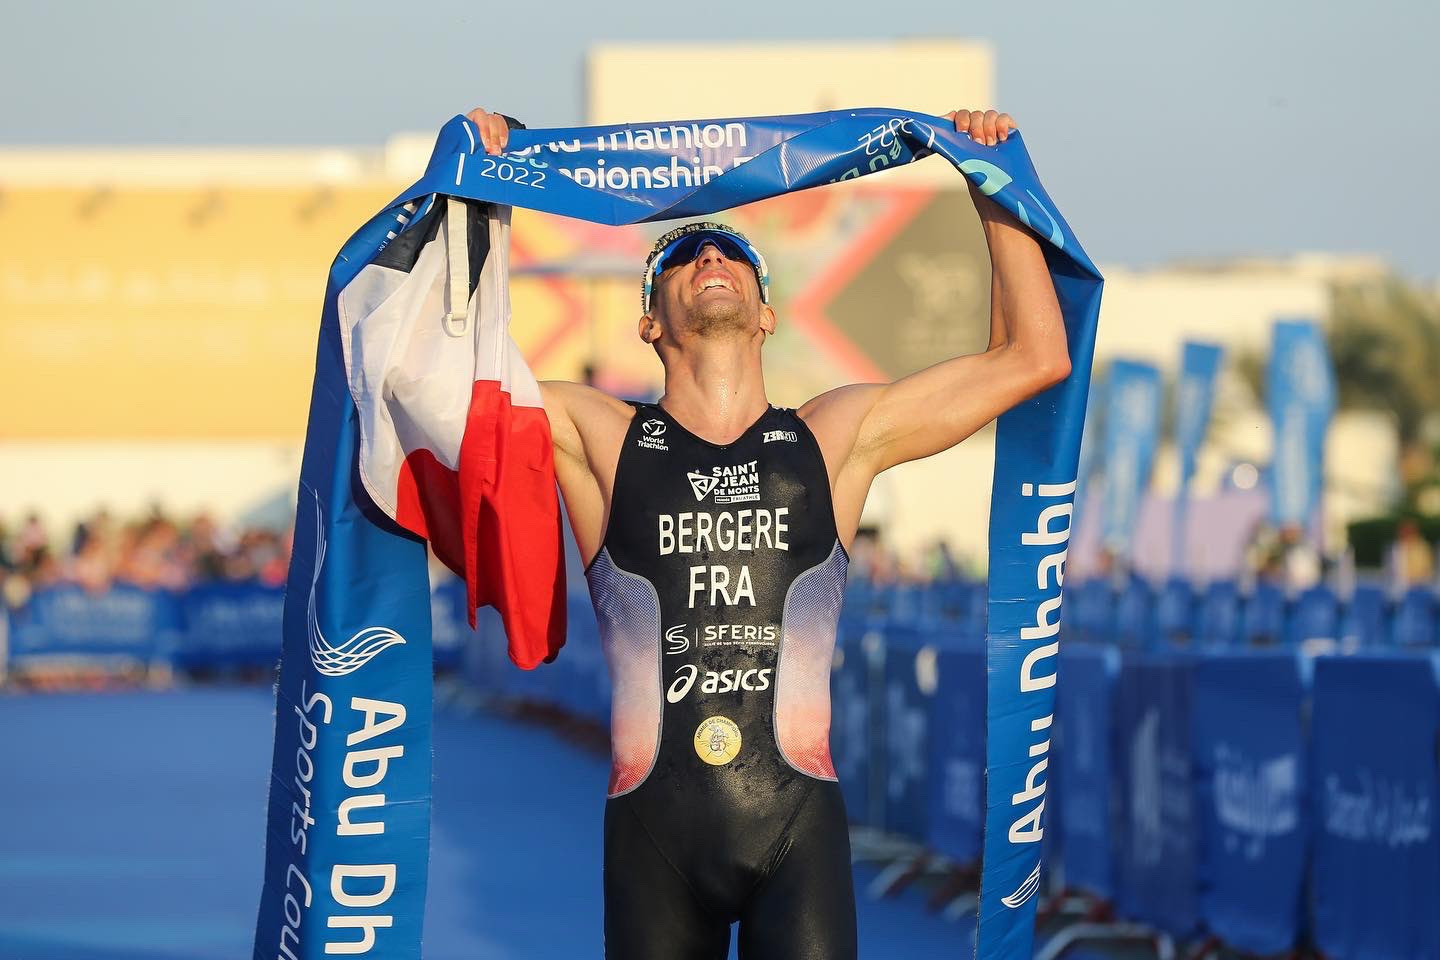 France's Léo Bergère became men's world champion in dramatic fashion in Abu Dhabi ©World Triathlon